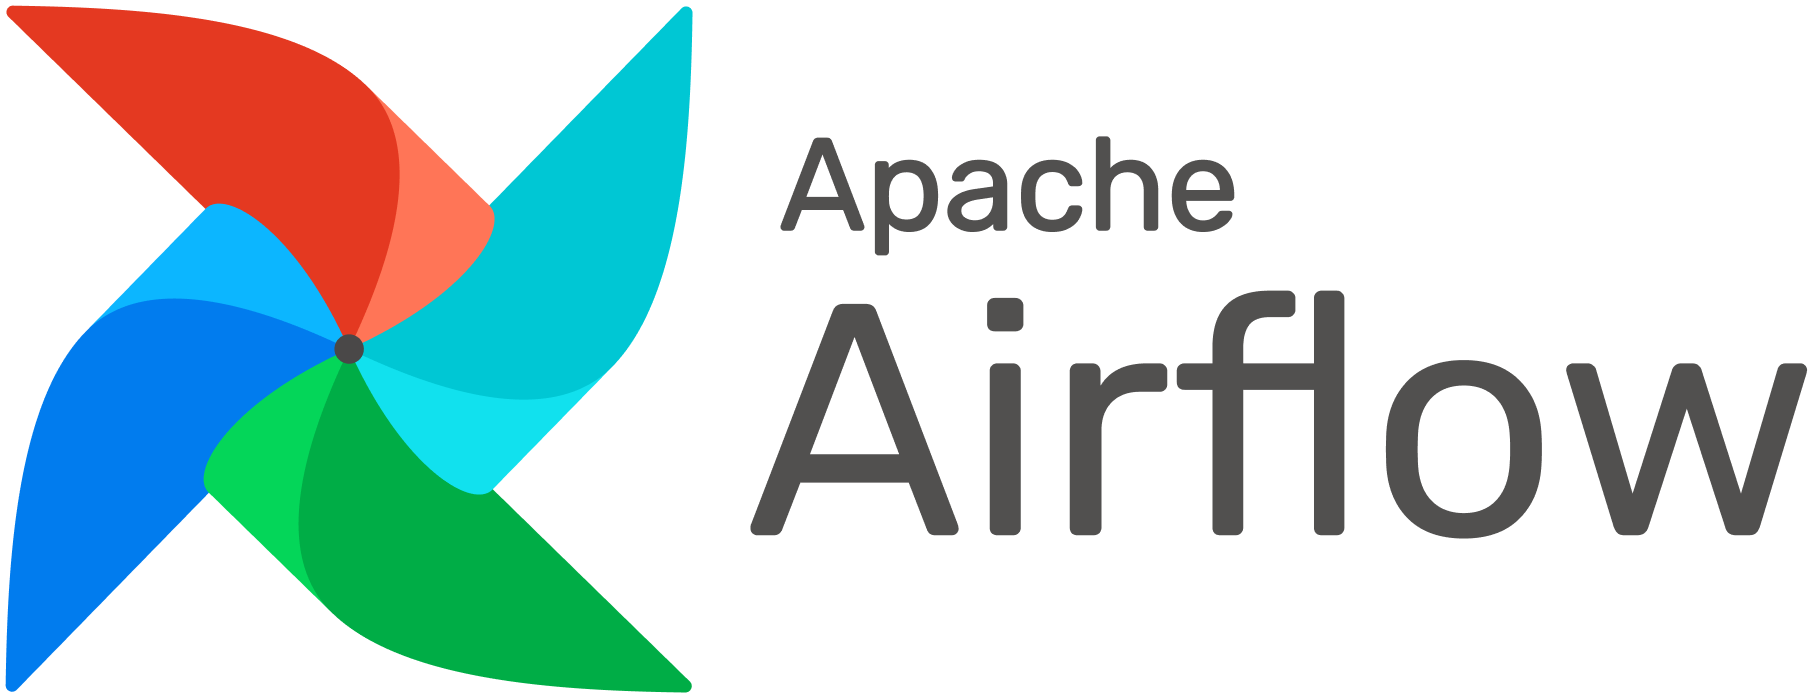 Triggering dynamic Spark tasks on Databricks with Apache Airflow